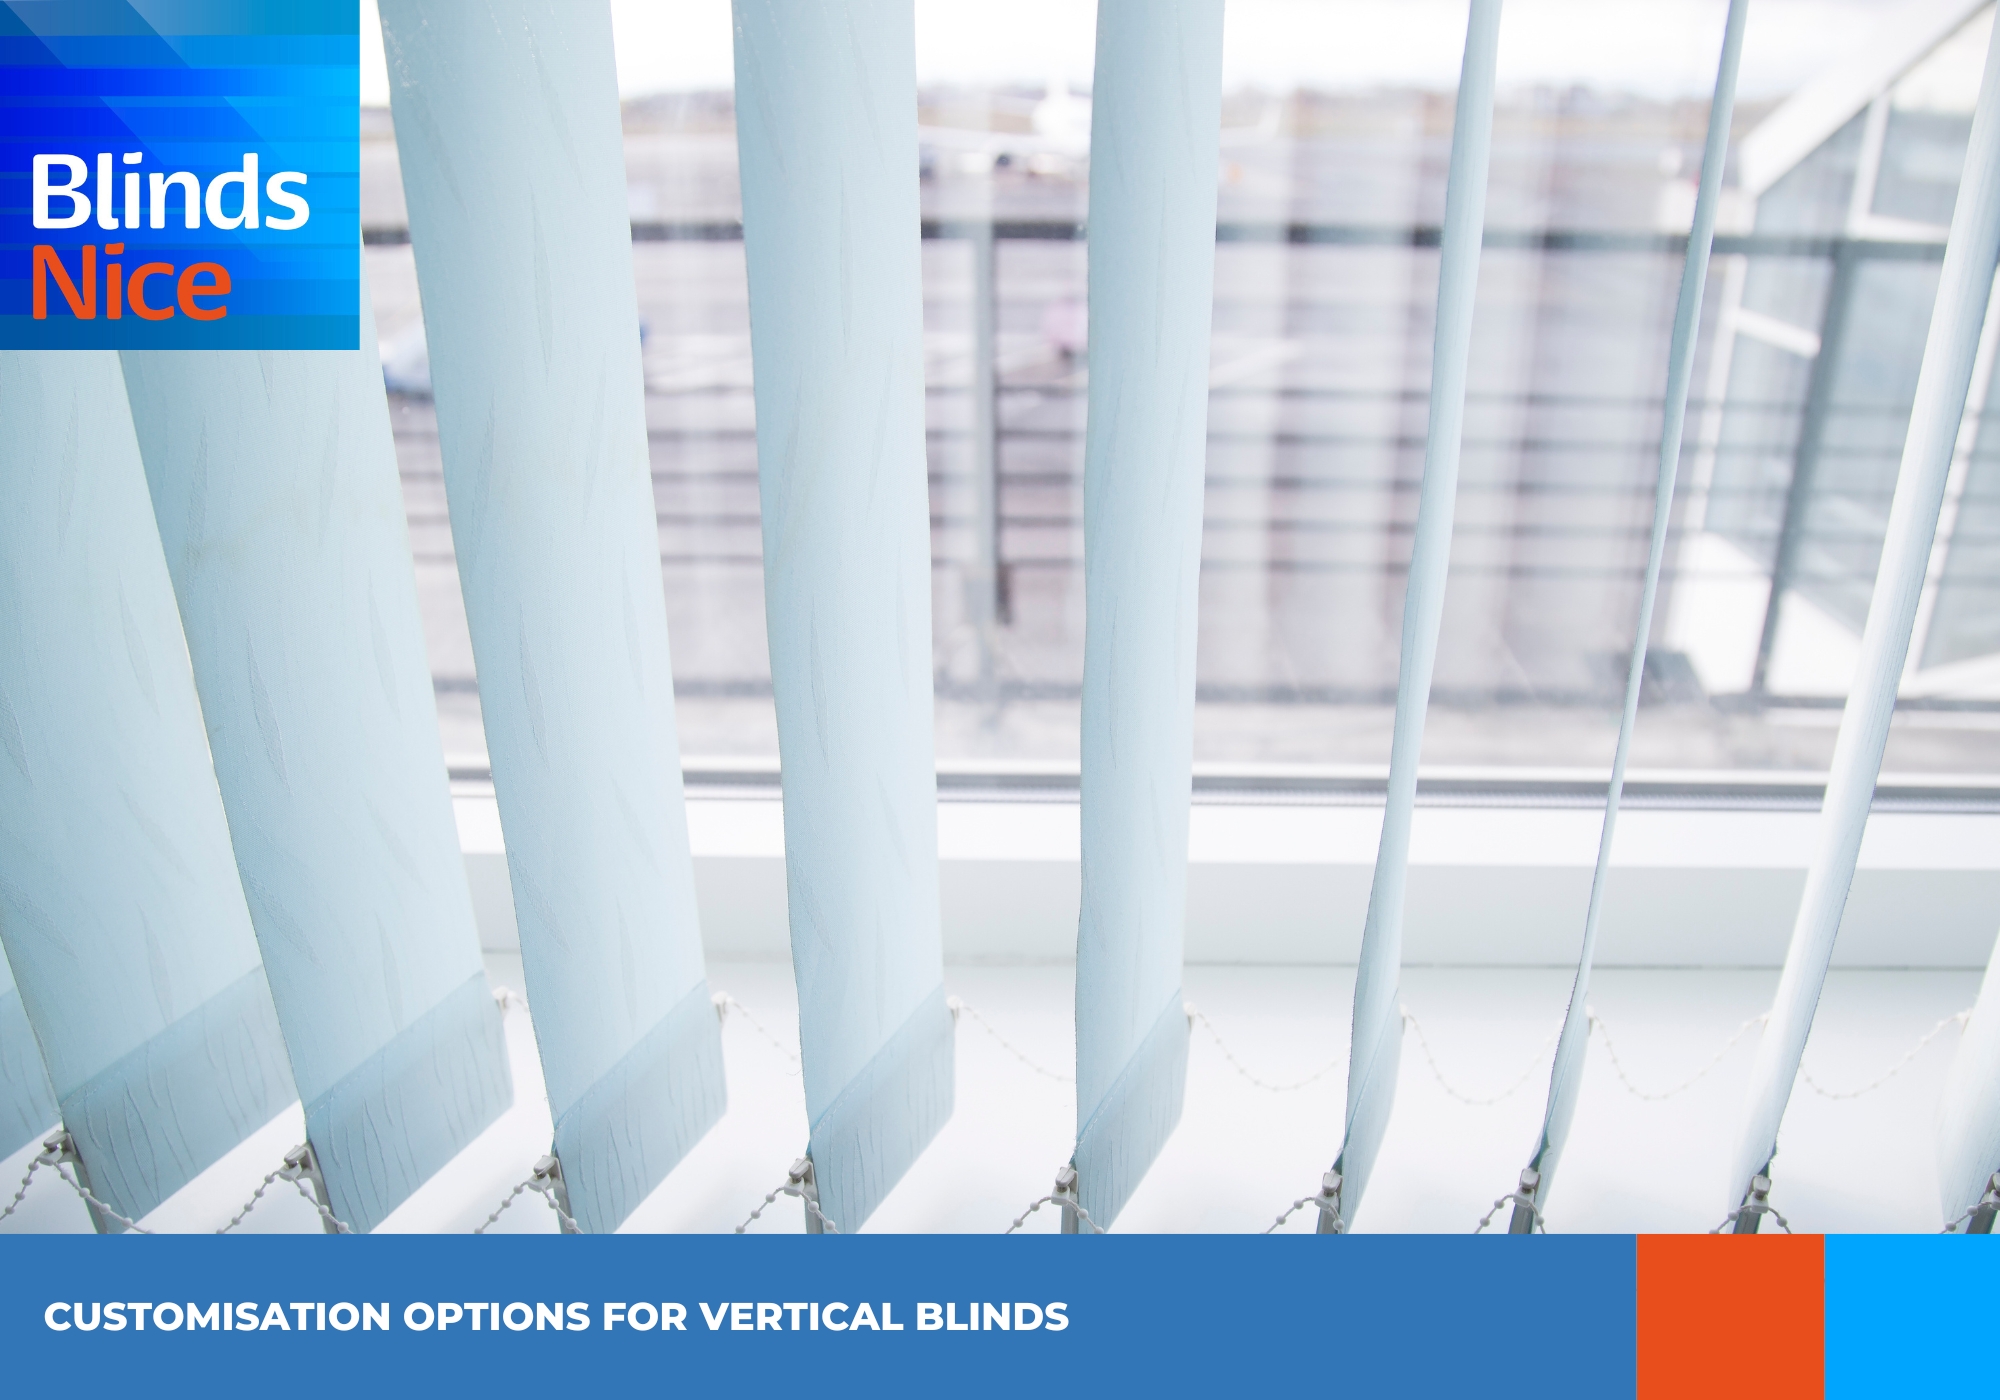 Customisation Options for Vertical Blinds